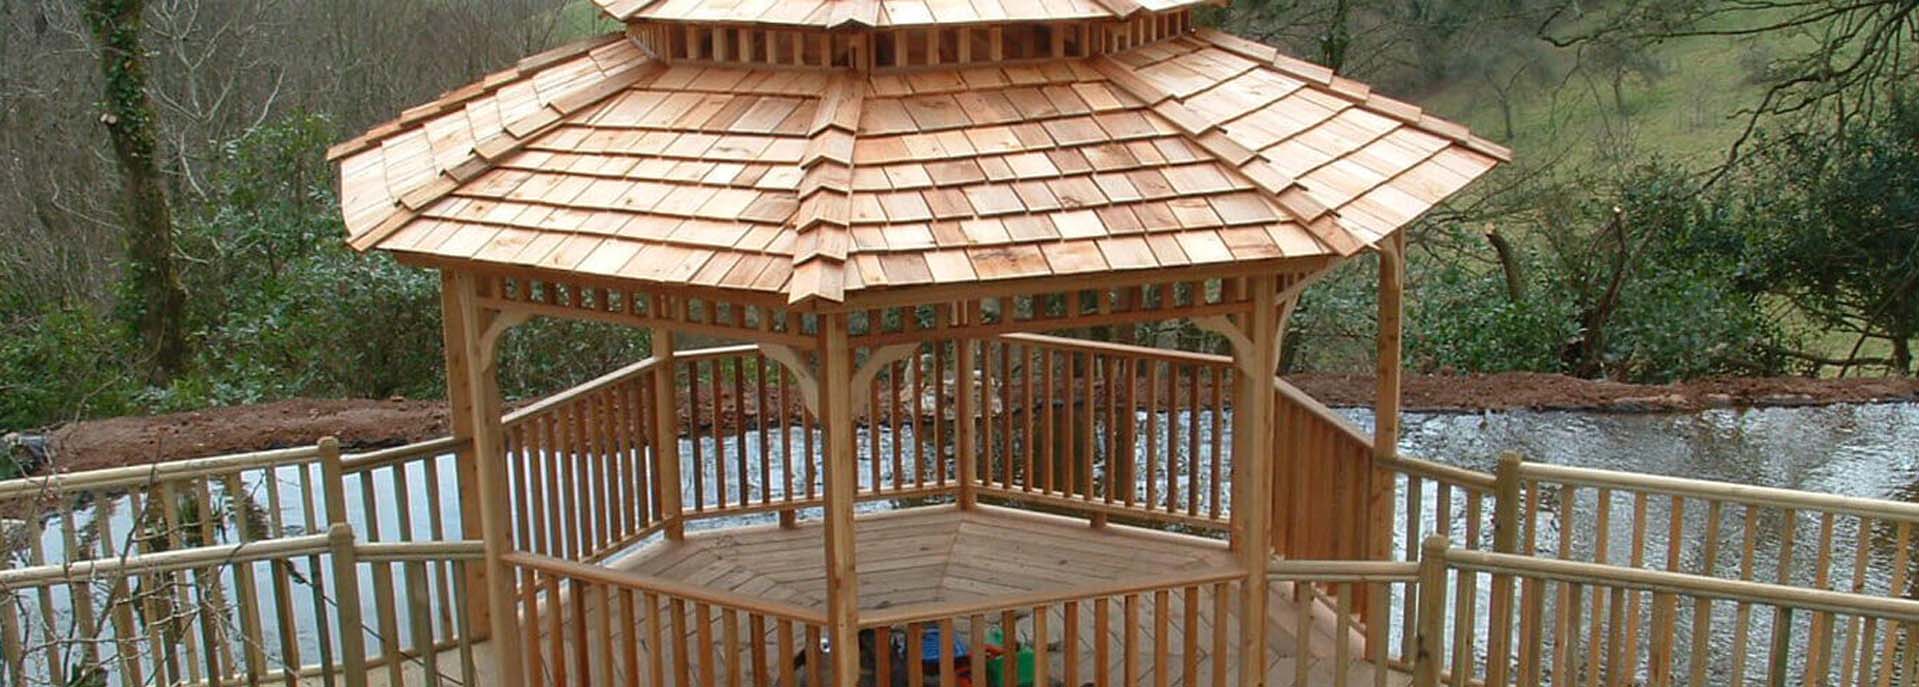 Wooden Cottages - Cedar Wood in Building Pergola And Gazebos Outdoor Design Banner